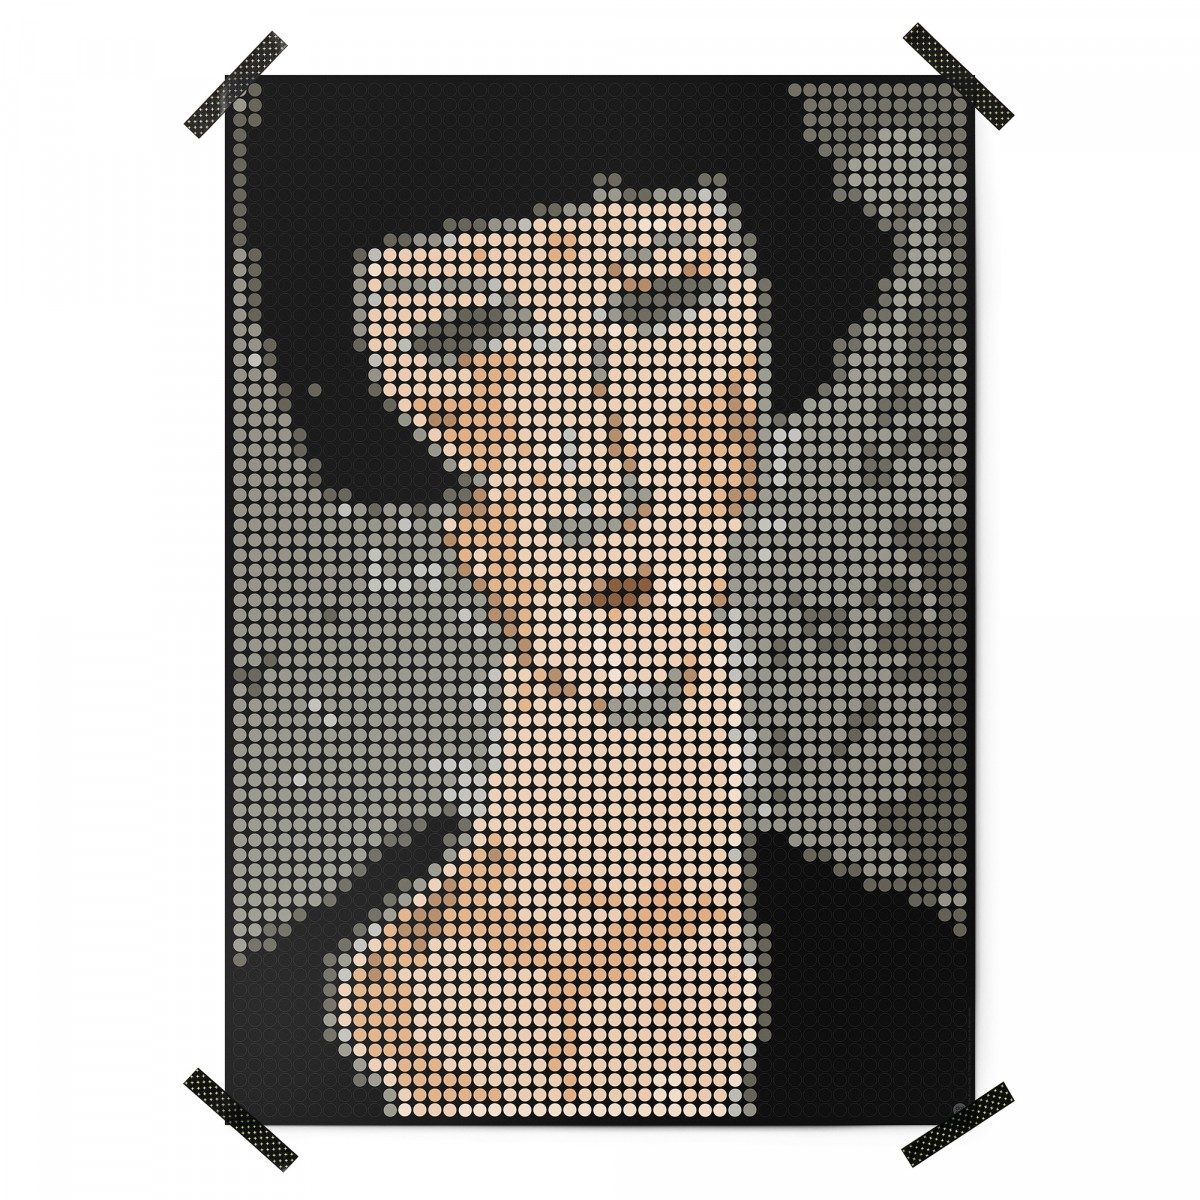 dot on Pixelart / DIY-Kunstwerk mit Klebepunkten / modigliani 50x70 cm